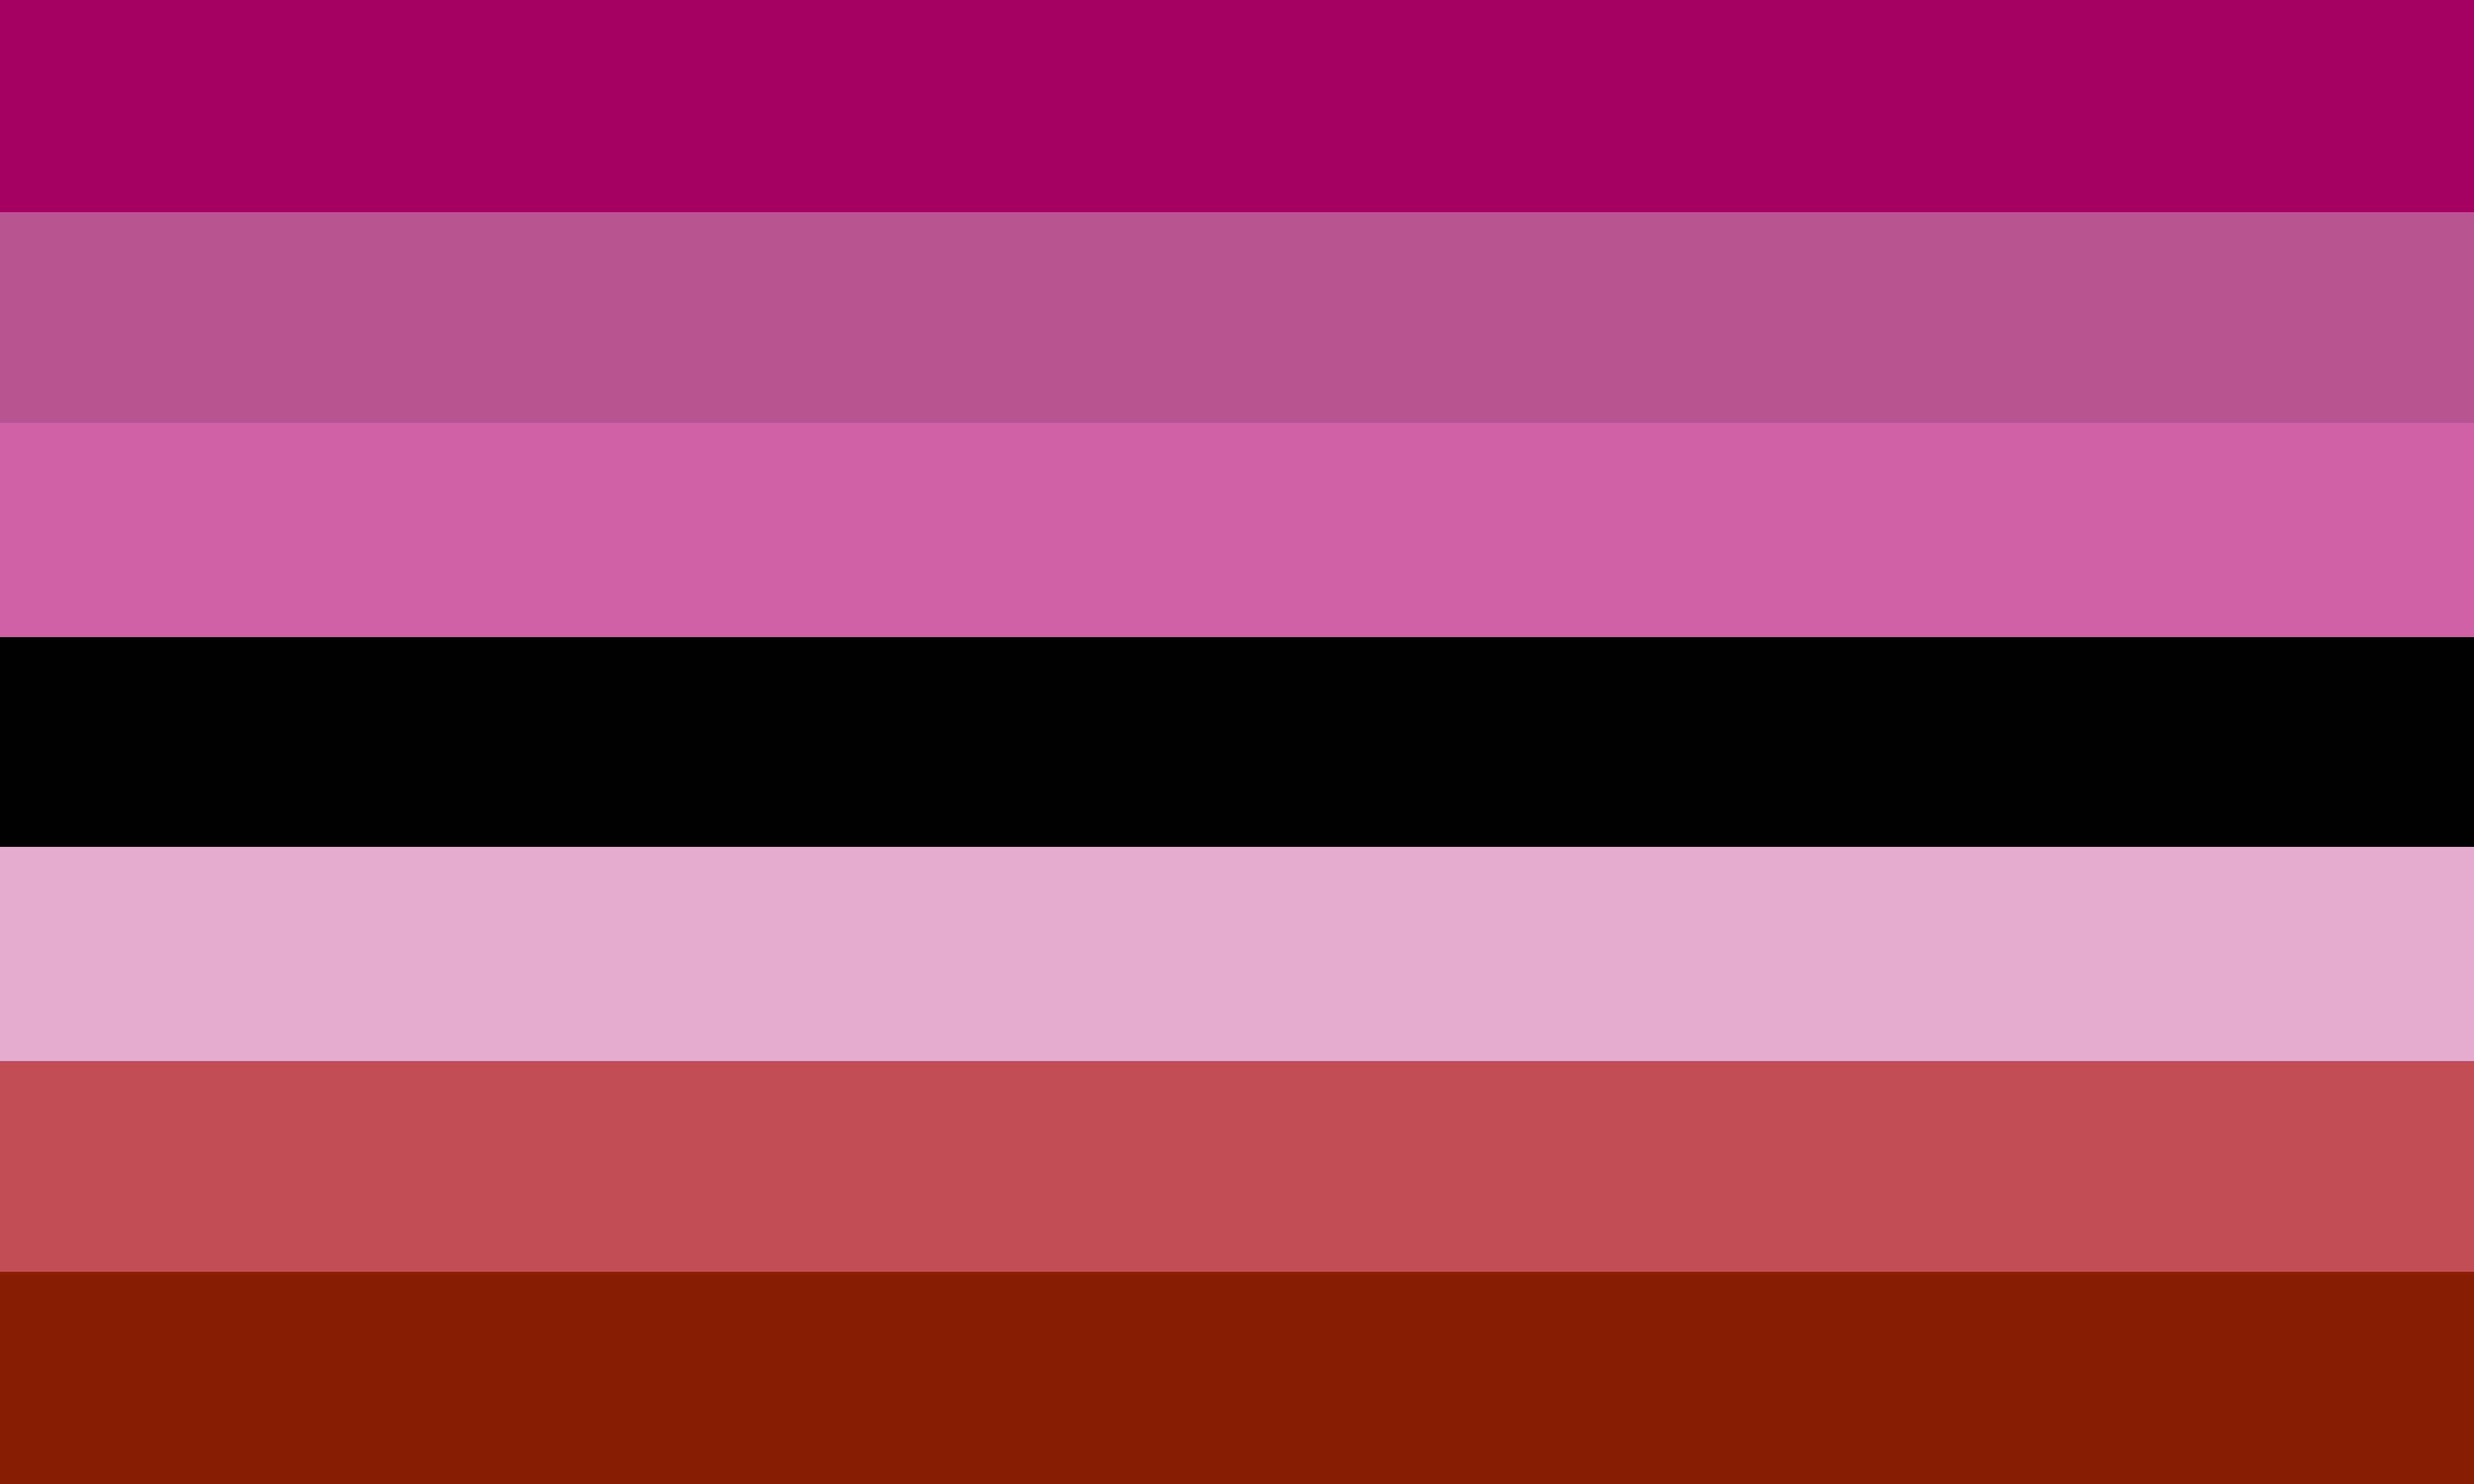 Black Lesbian Pride by Pride-Flags on DeviantArt.